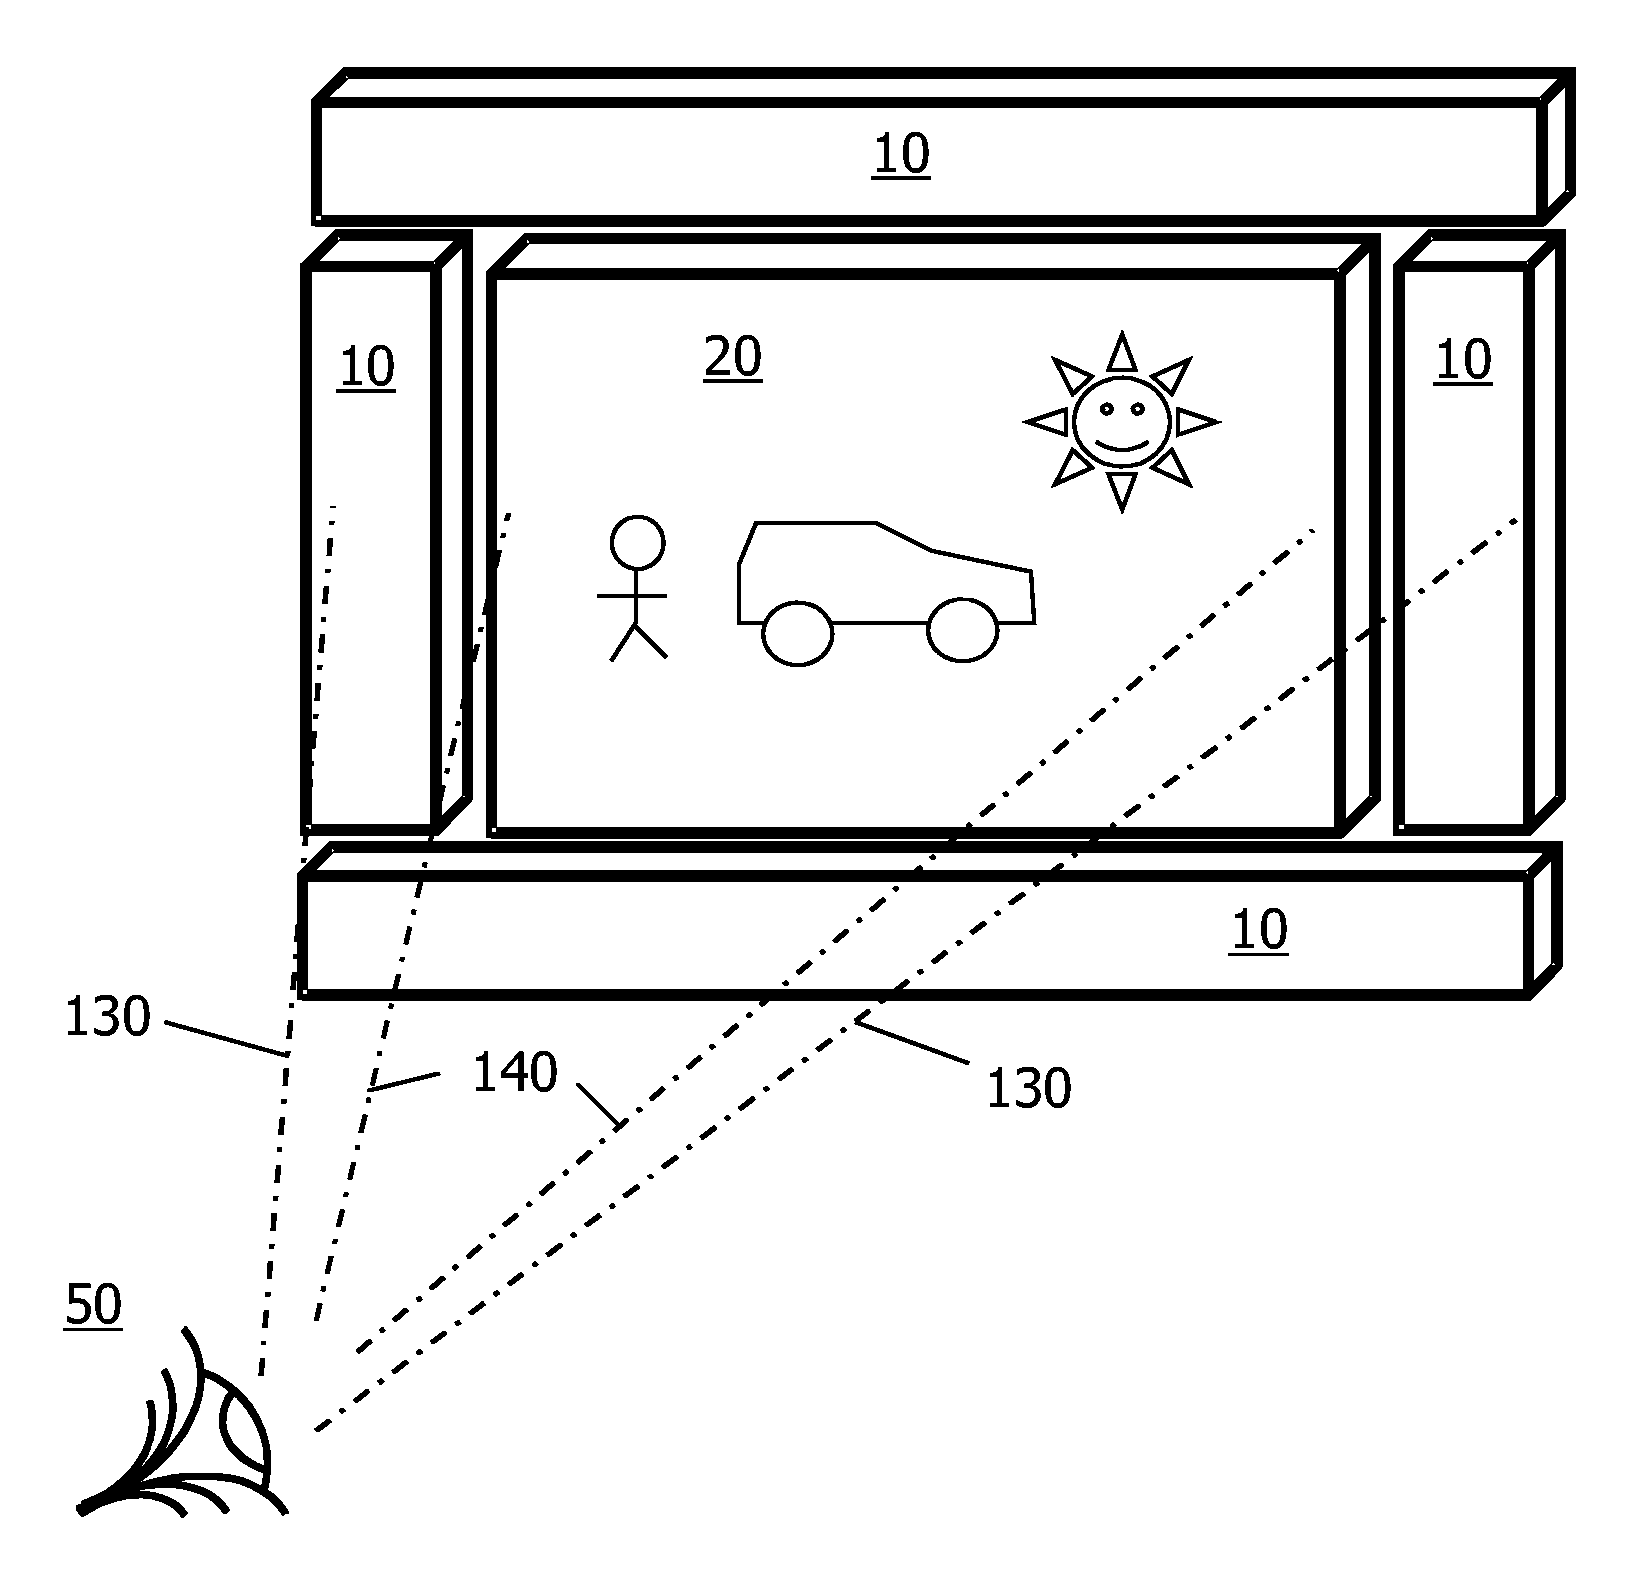 Display system